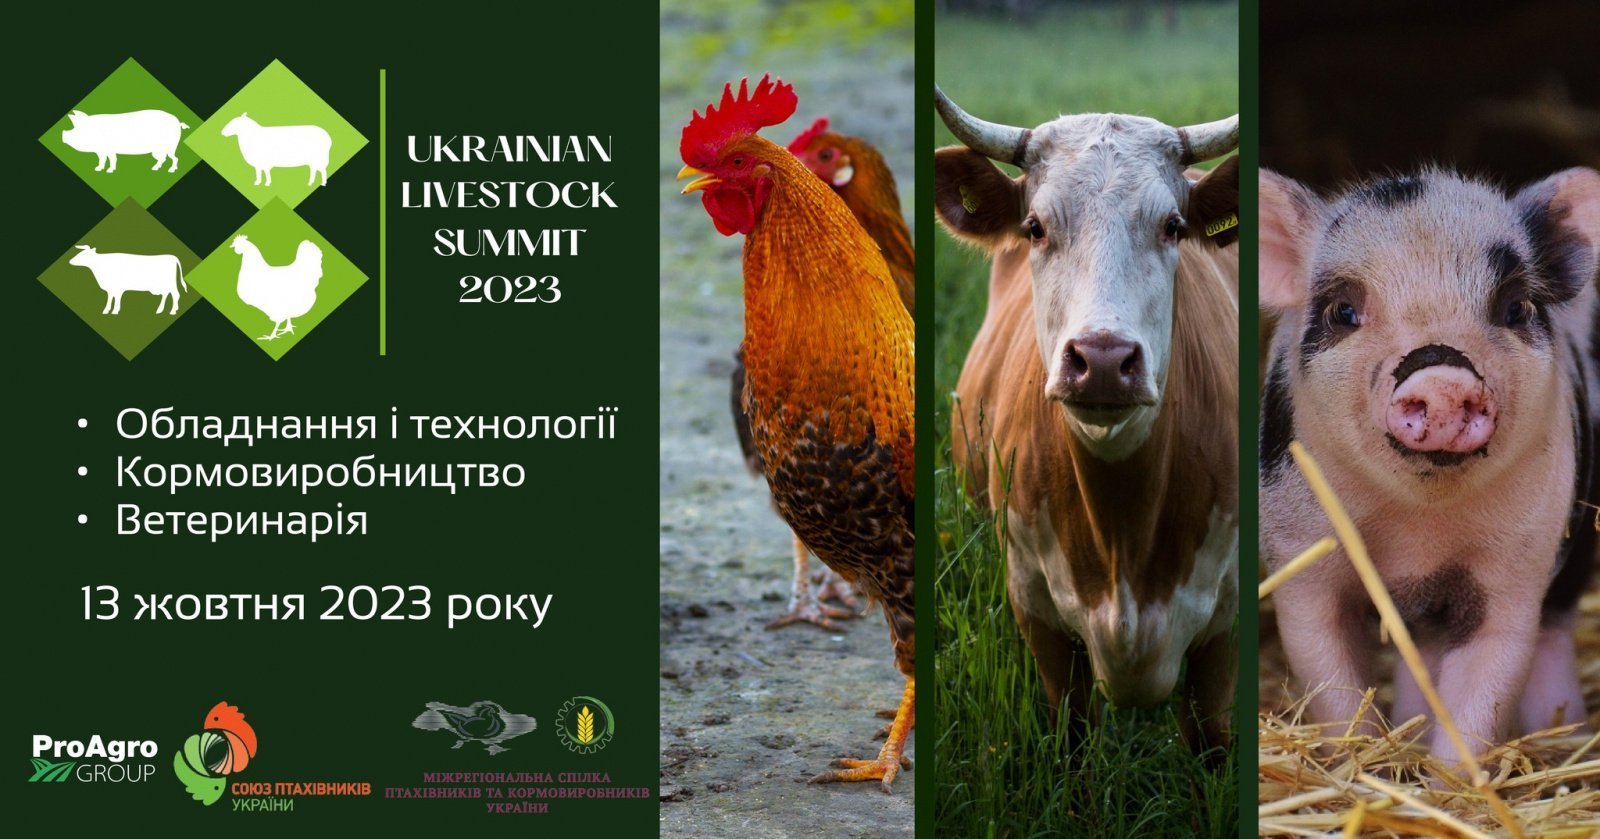 Проведено Ukrainian Livestock Summit 2023